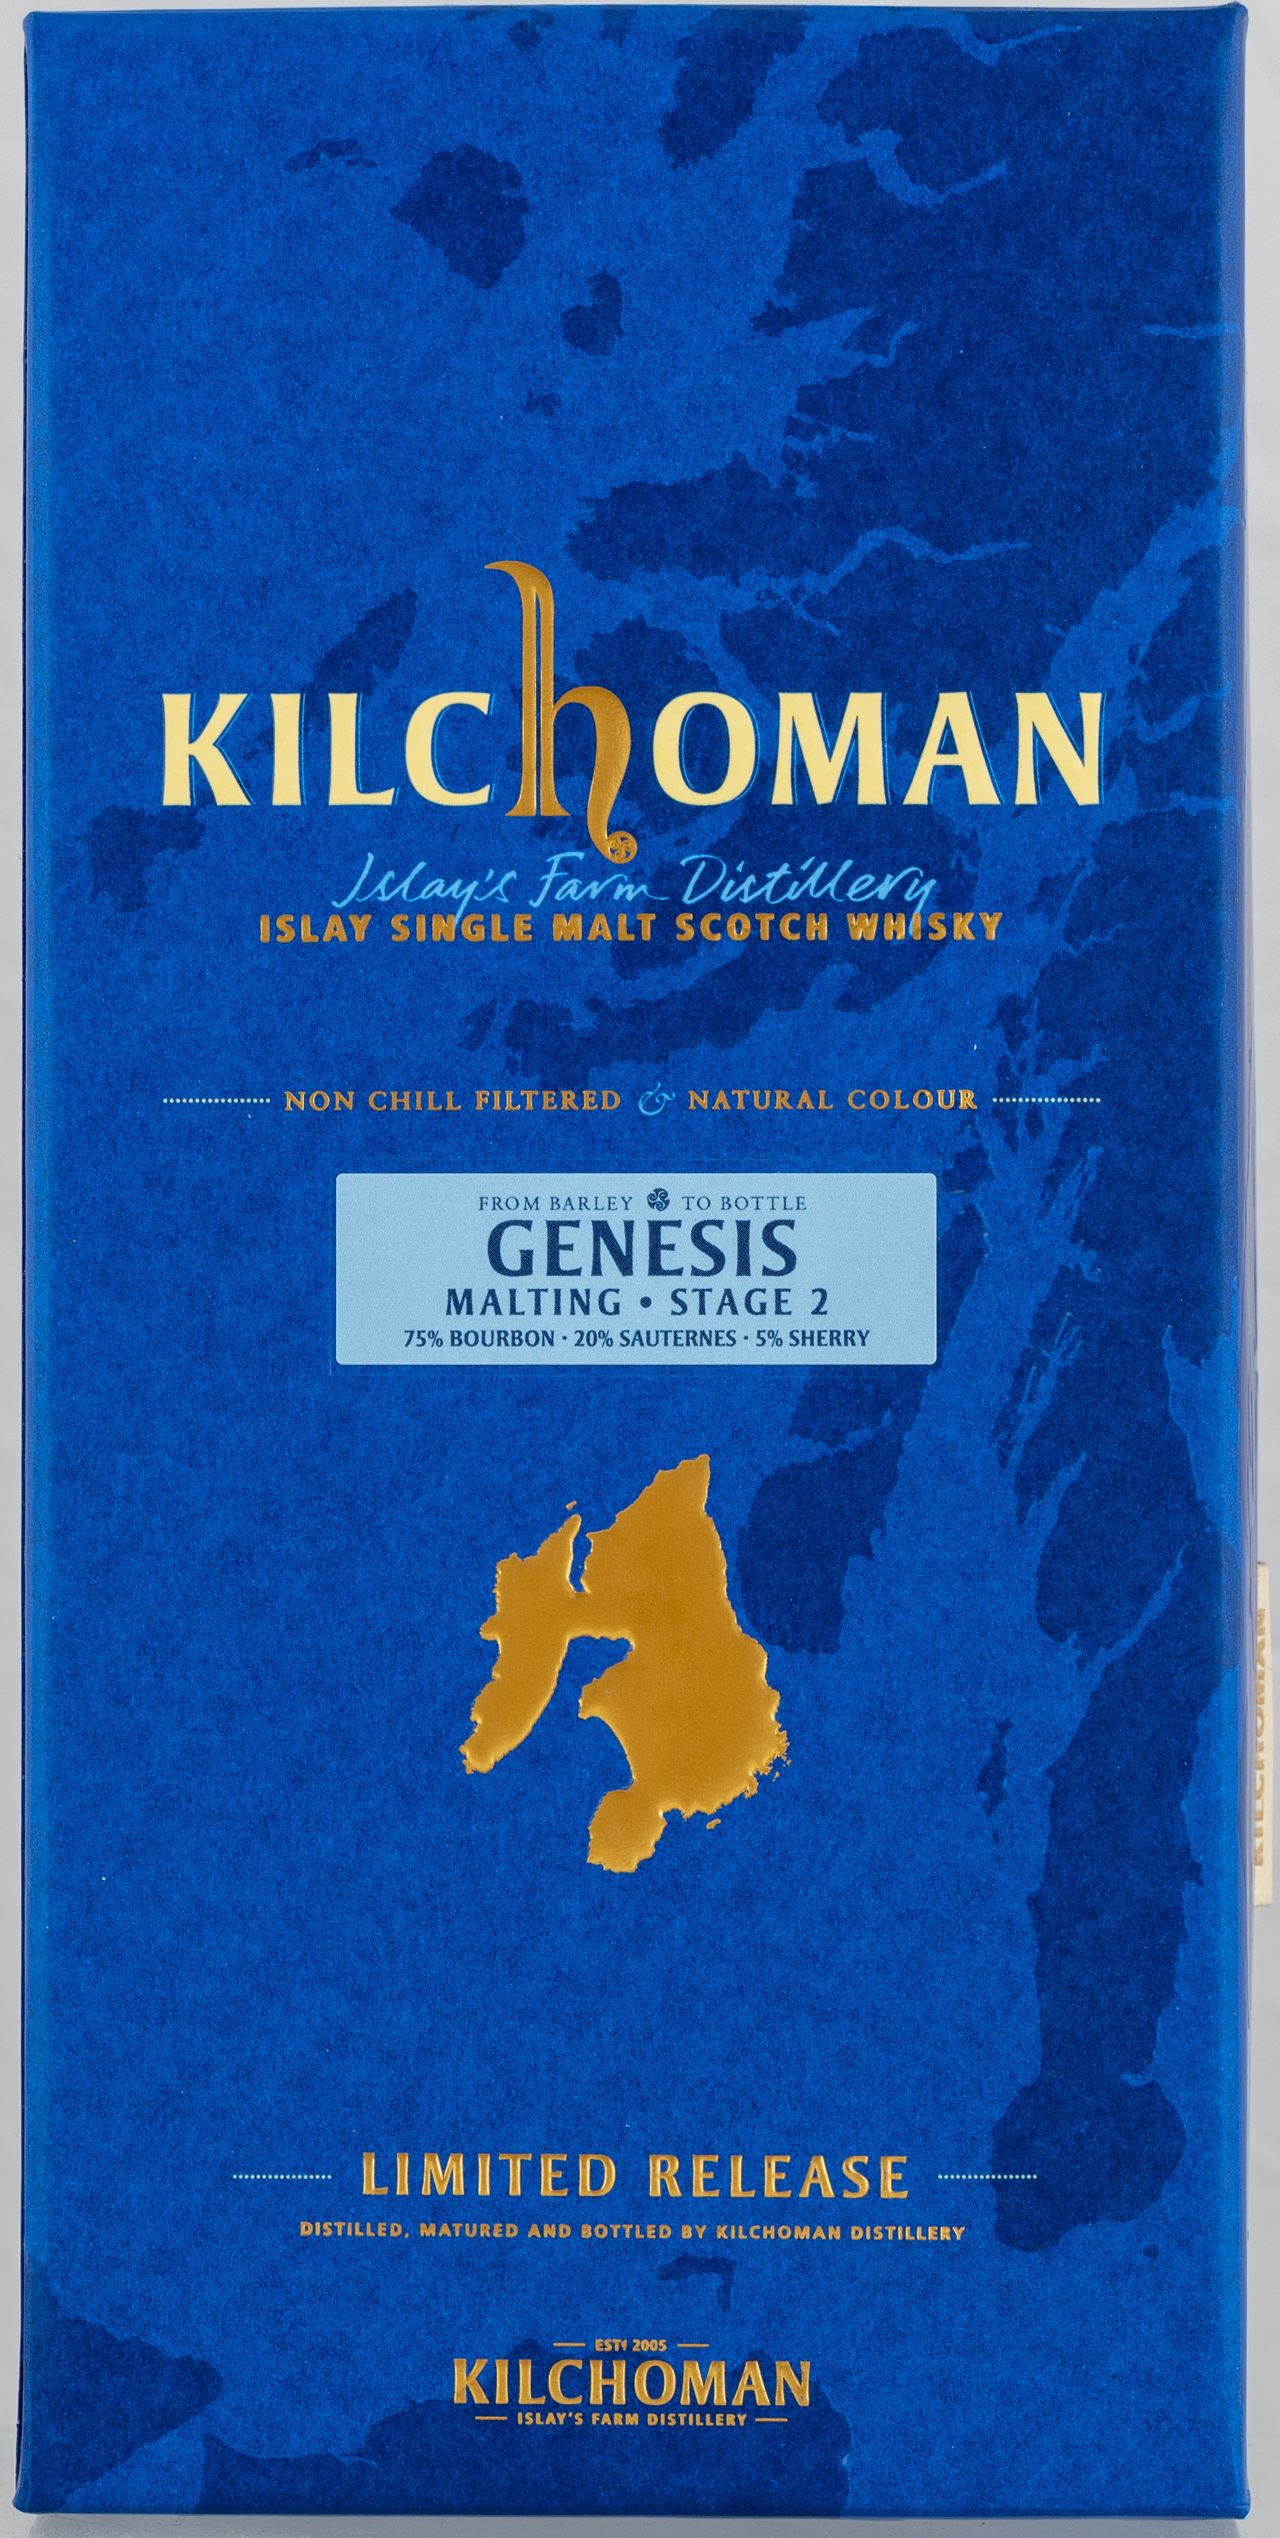 Billede: PHC_7288 - Kilchoman - Genesis - Malting Stage 2 - box front.jpg